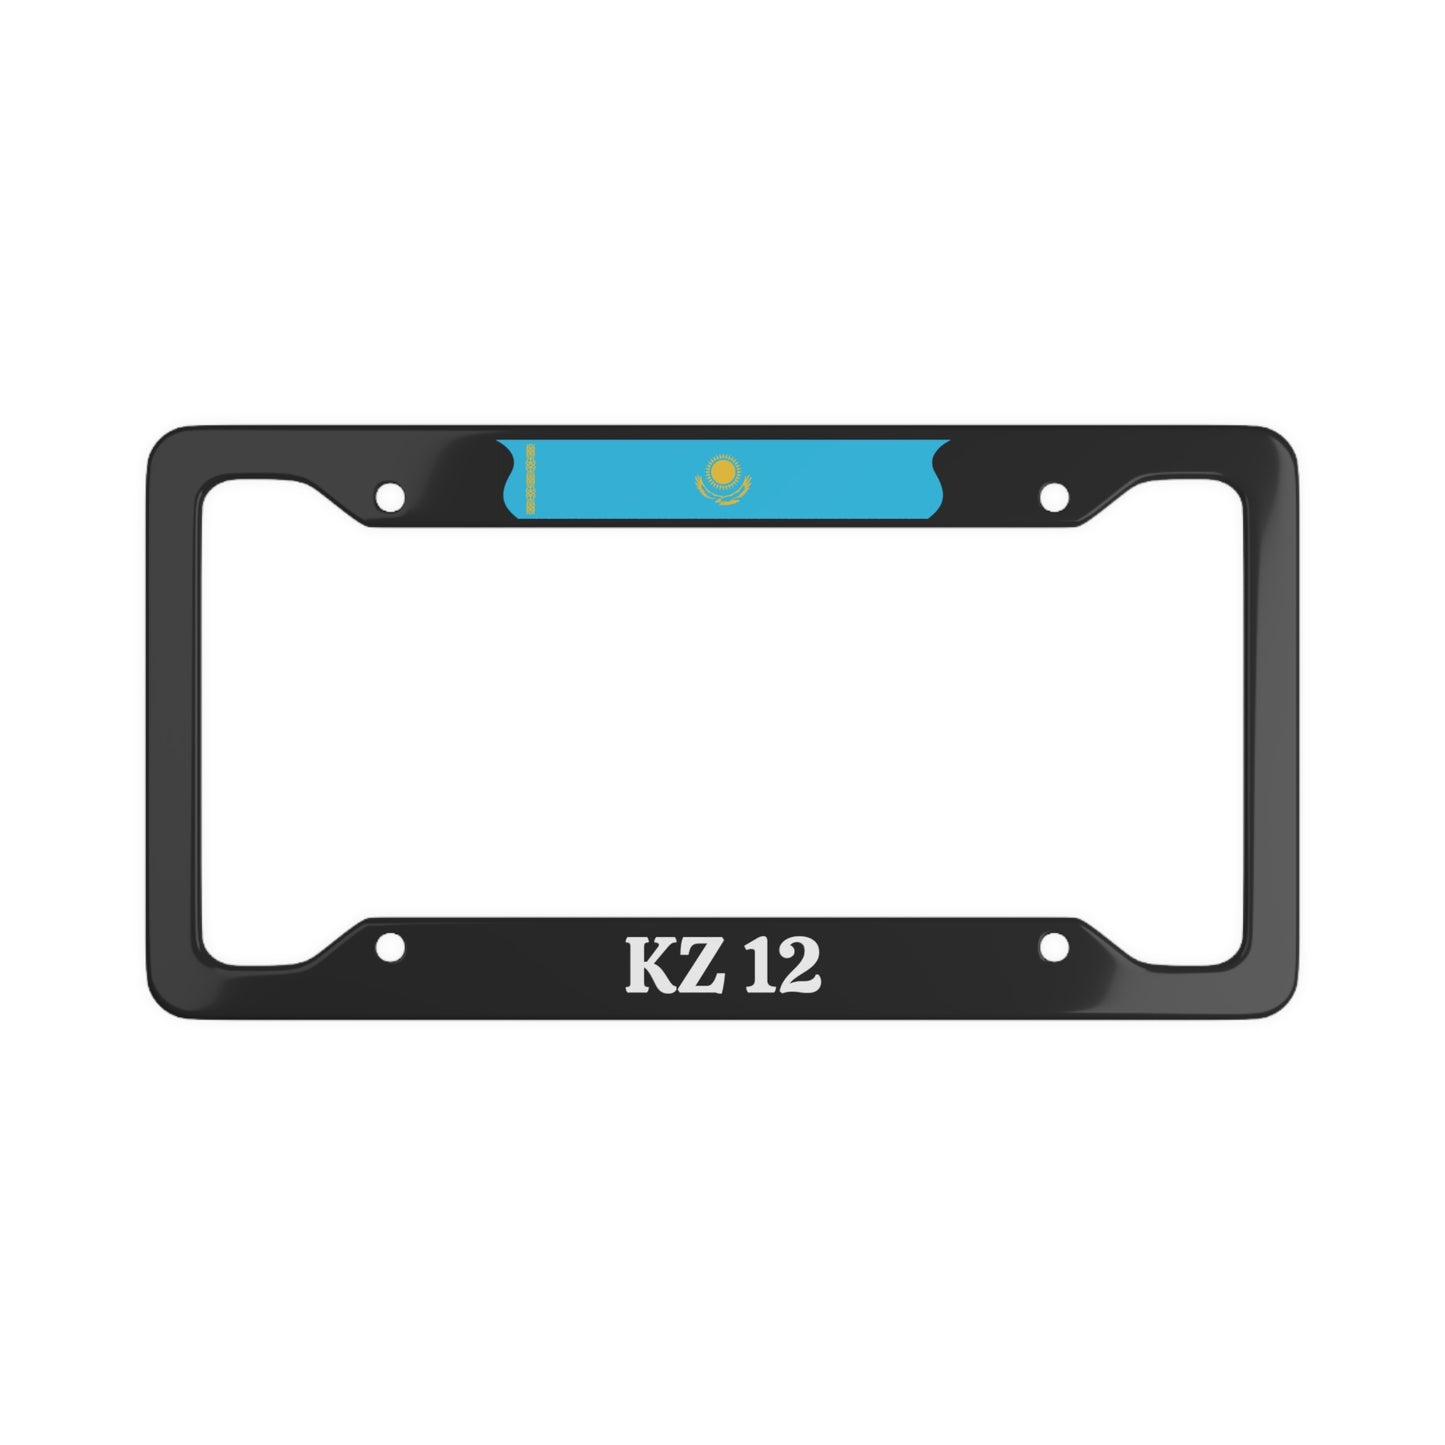 KZ 12 License Plate Frame